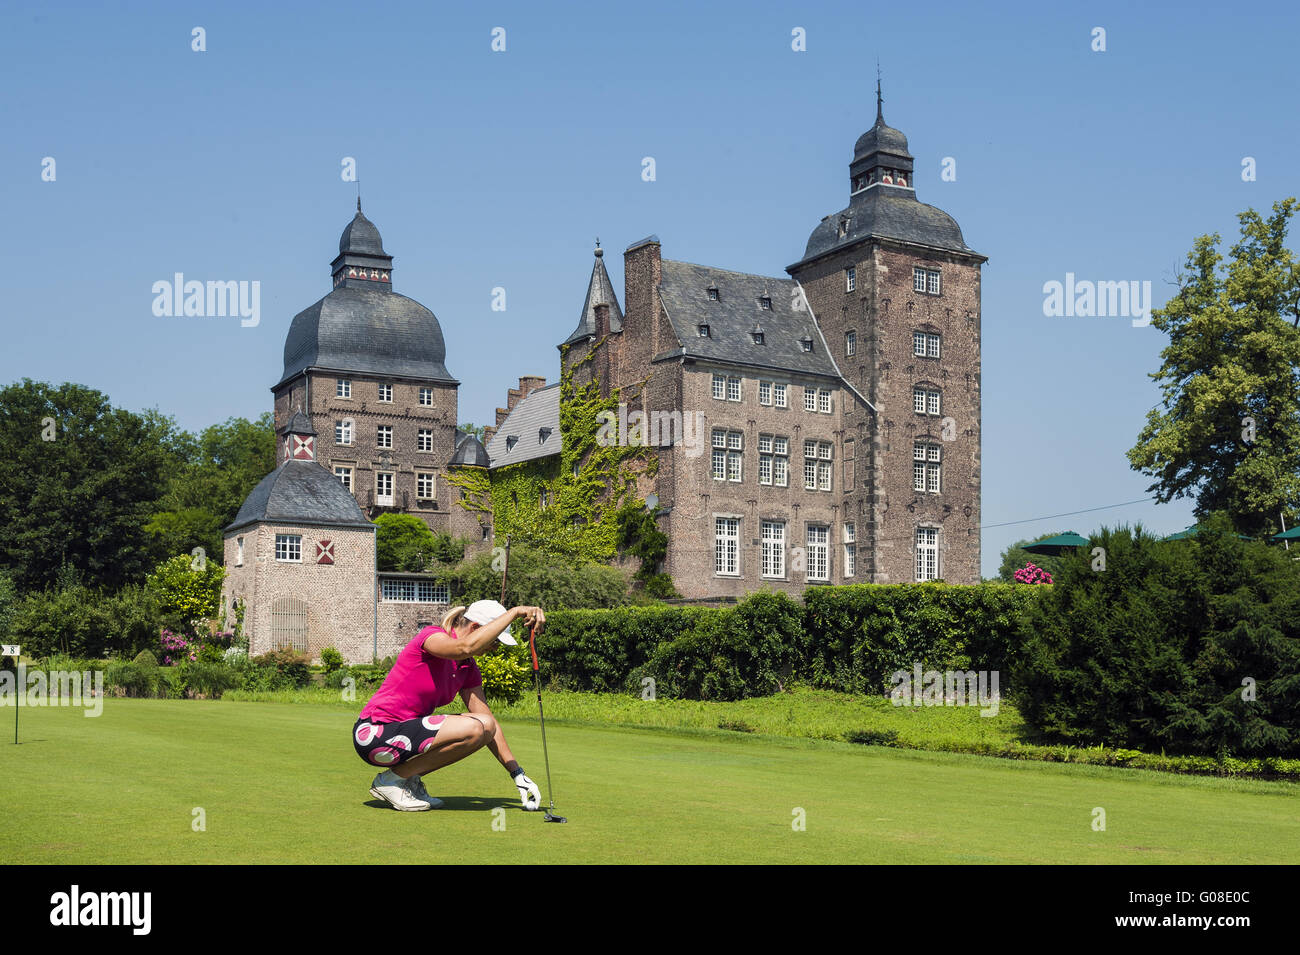 Golfista en cuclillas sobre el césped del golf cours Foto de stock